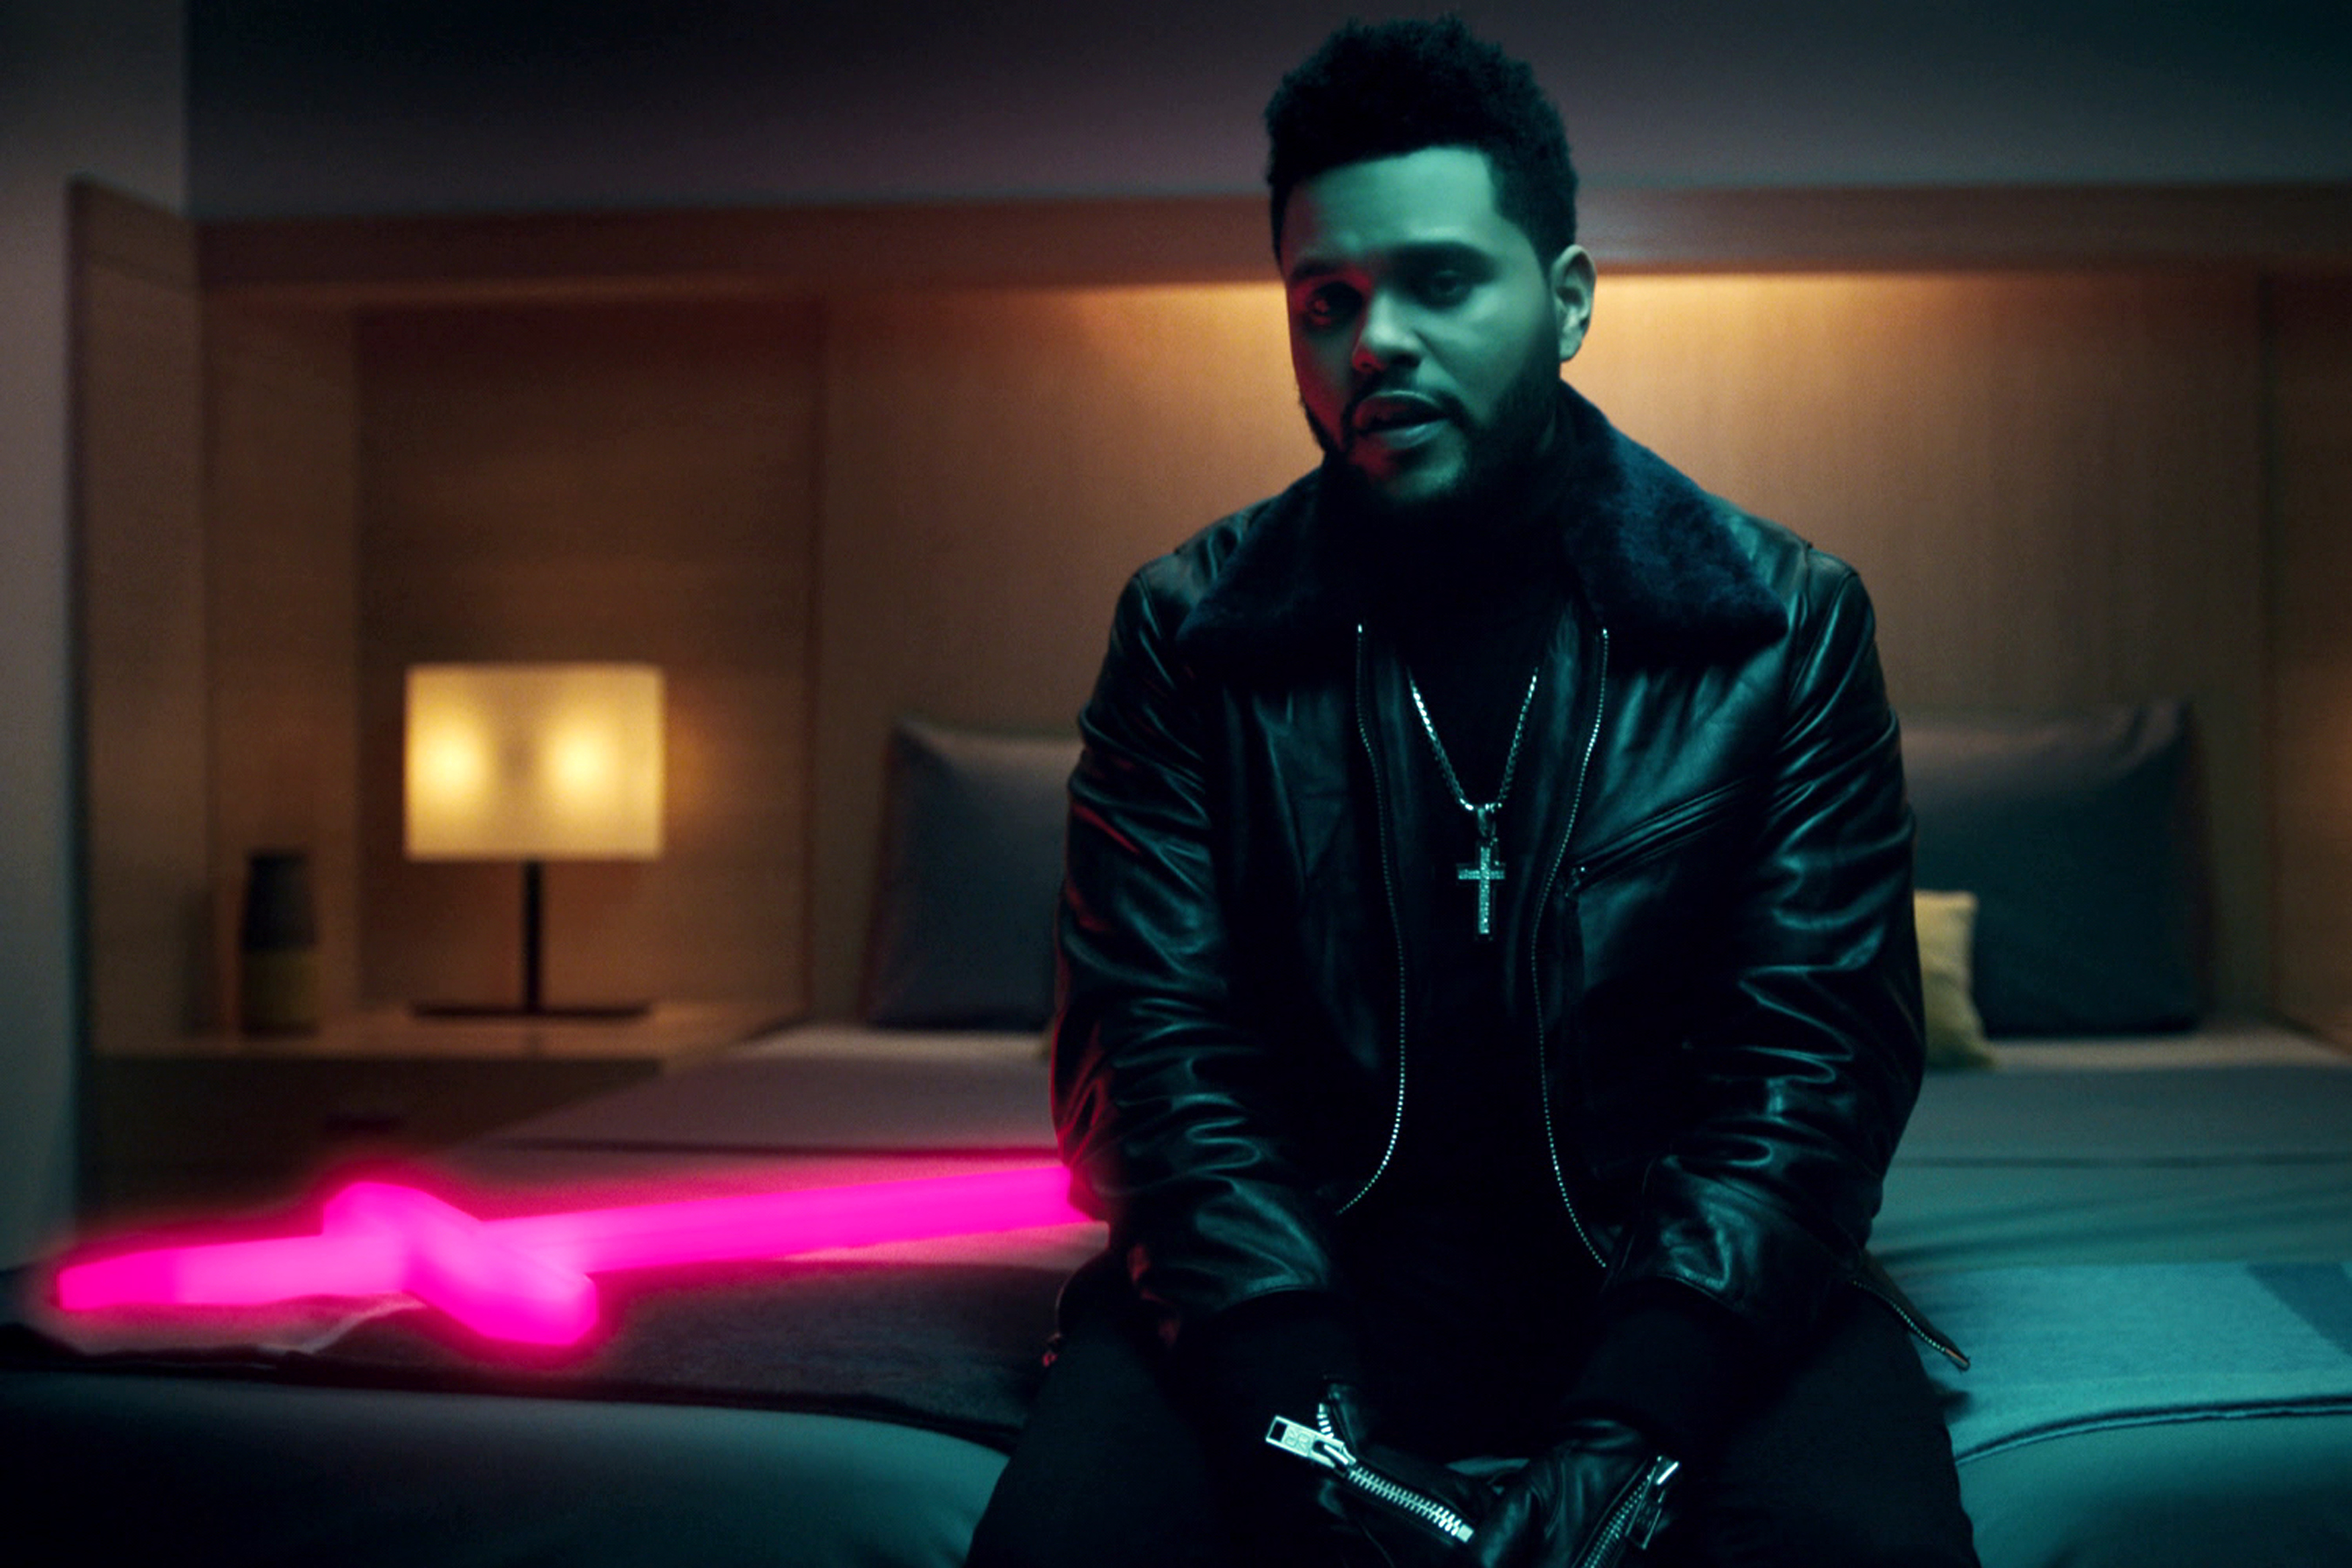 Песня мужчина 1. The Weeknd. Уикенд старбой. Starboy обложка. The weekend 2015.